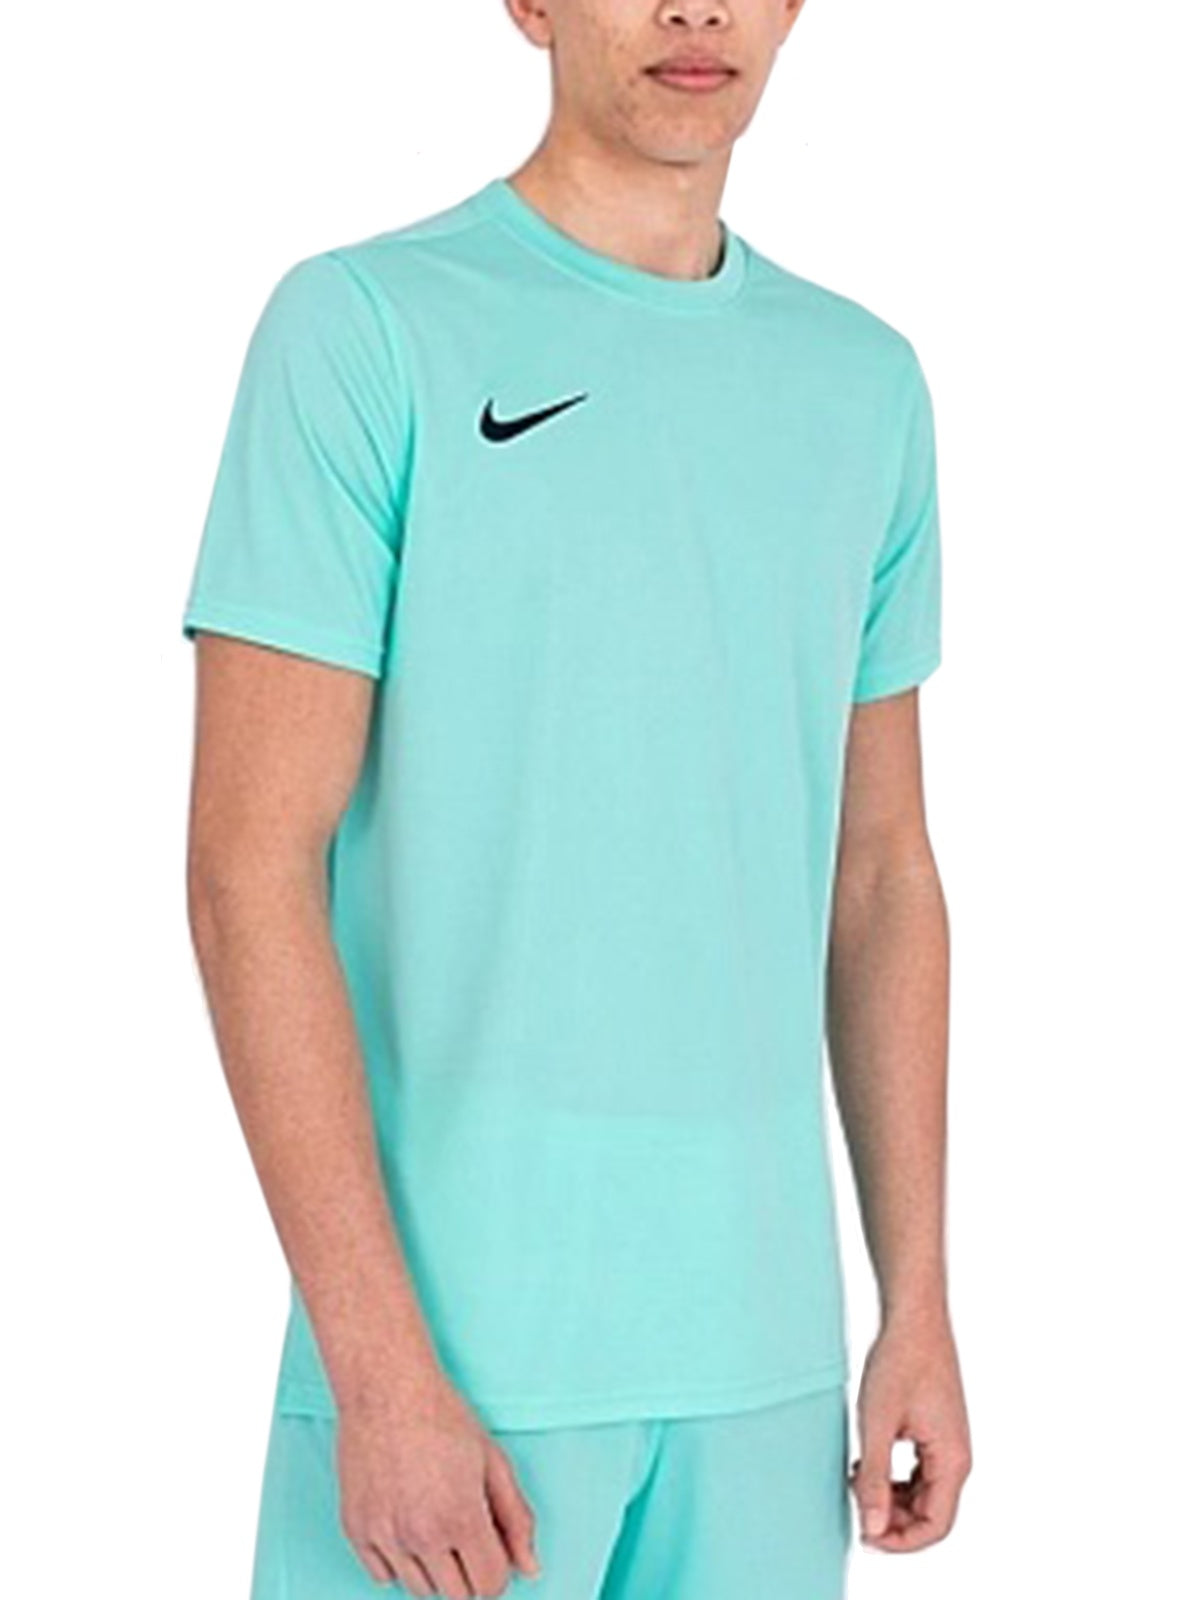 T-shirt Uomo Nike - Park Vii Tech Jersey T-Shirt - Verde